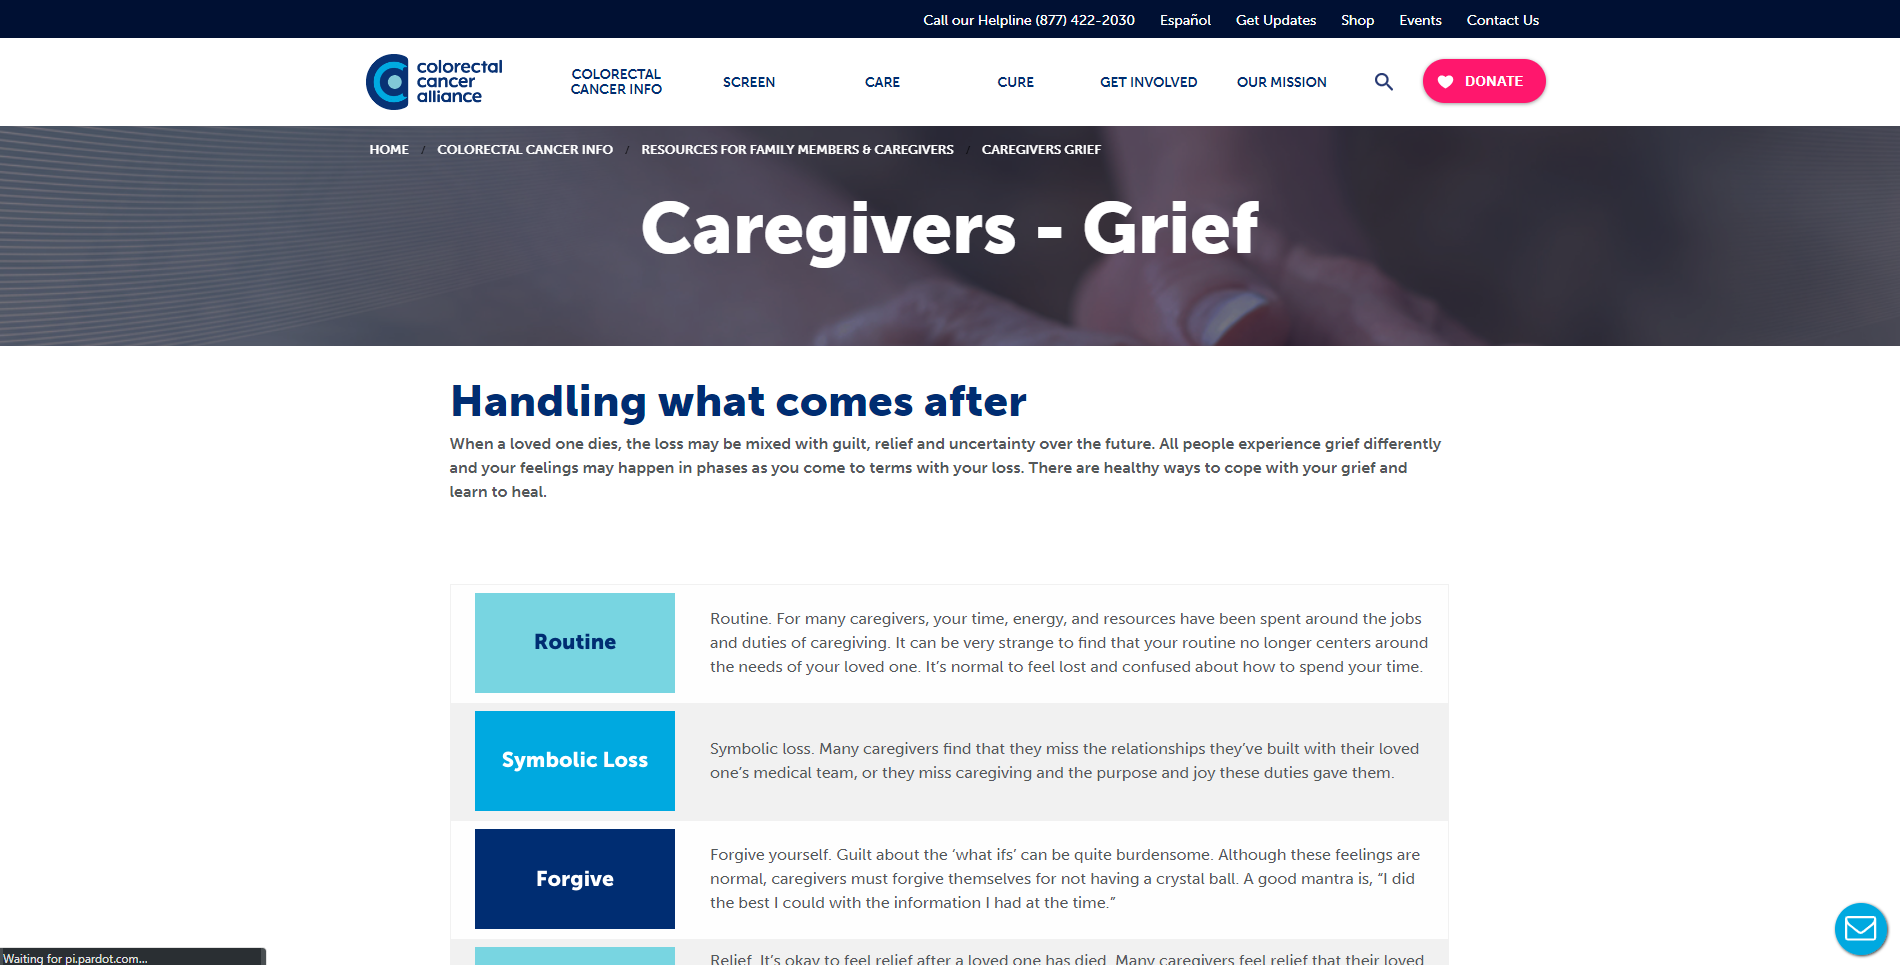 Caregivers - Grief